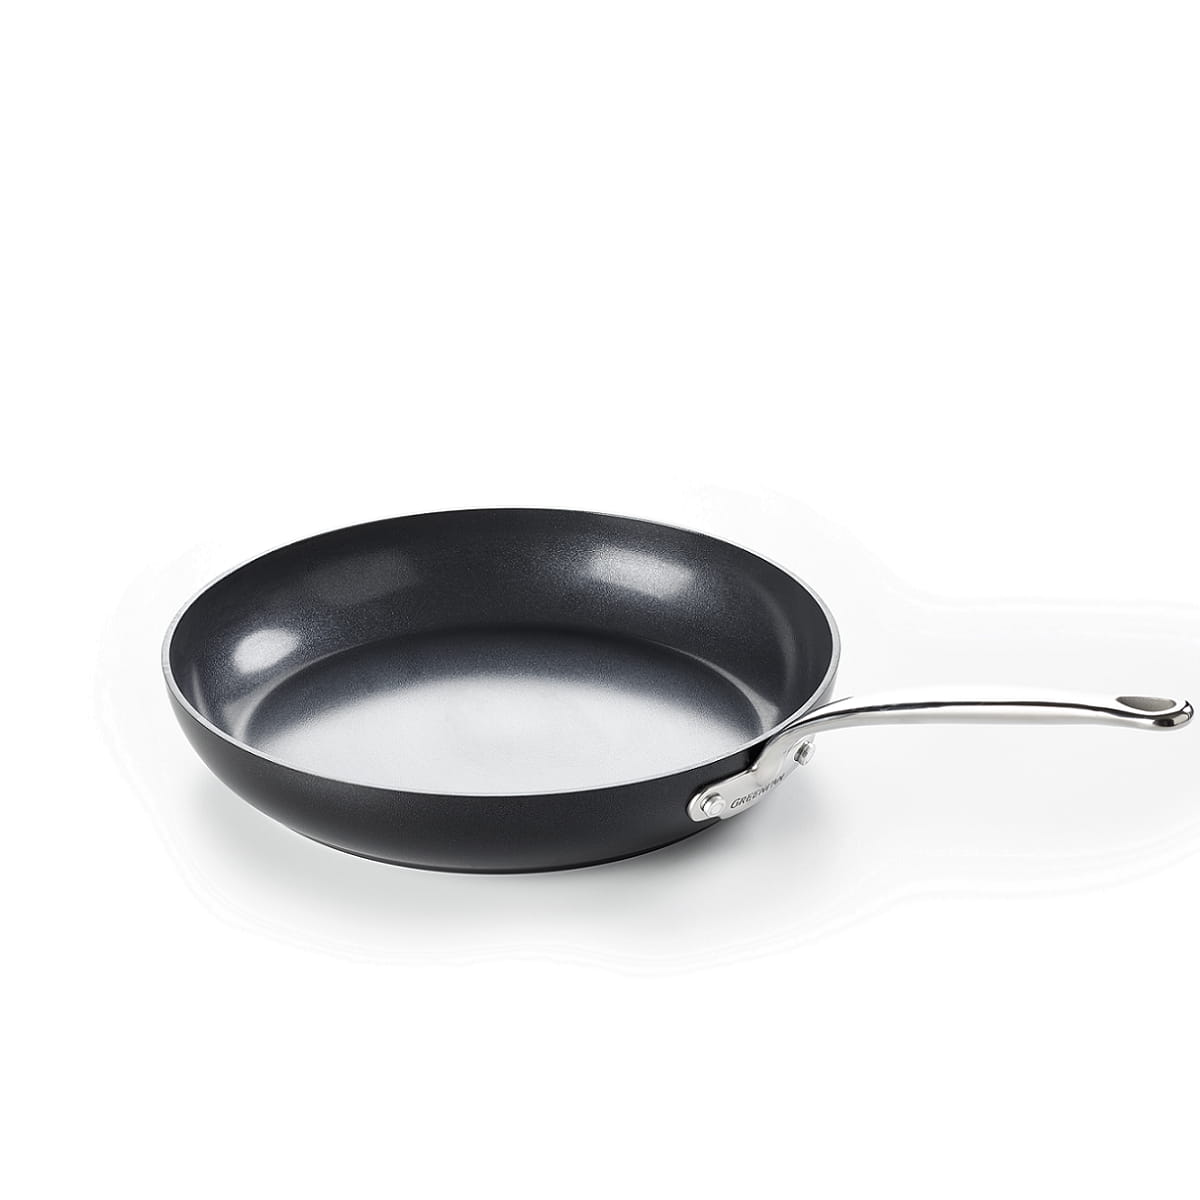 CW002207-002 - Barcelona Frying Pan, Black - 28cm - Product Image 1